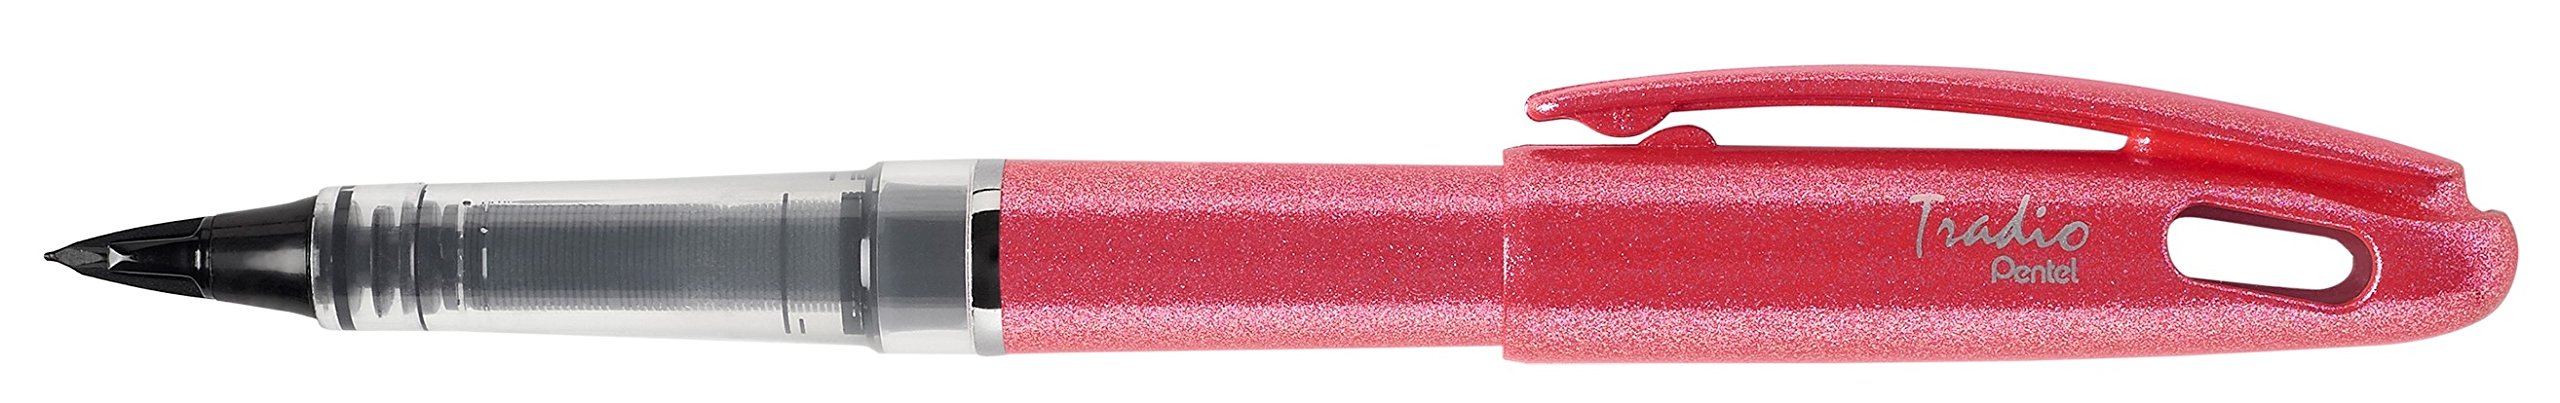 Pentel Tradio Iridescence TRJ95 Federstifte, Kunststoffspitze, schwarze Tinte, rosa Glitzer, 12 Stück